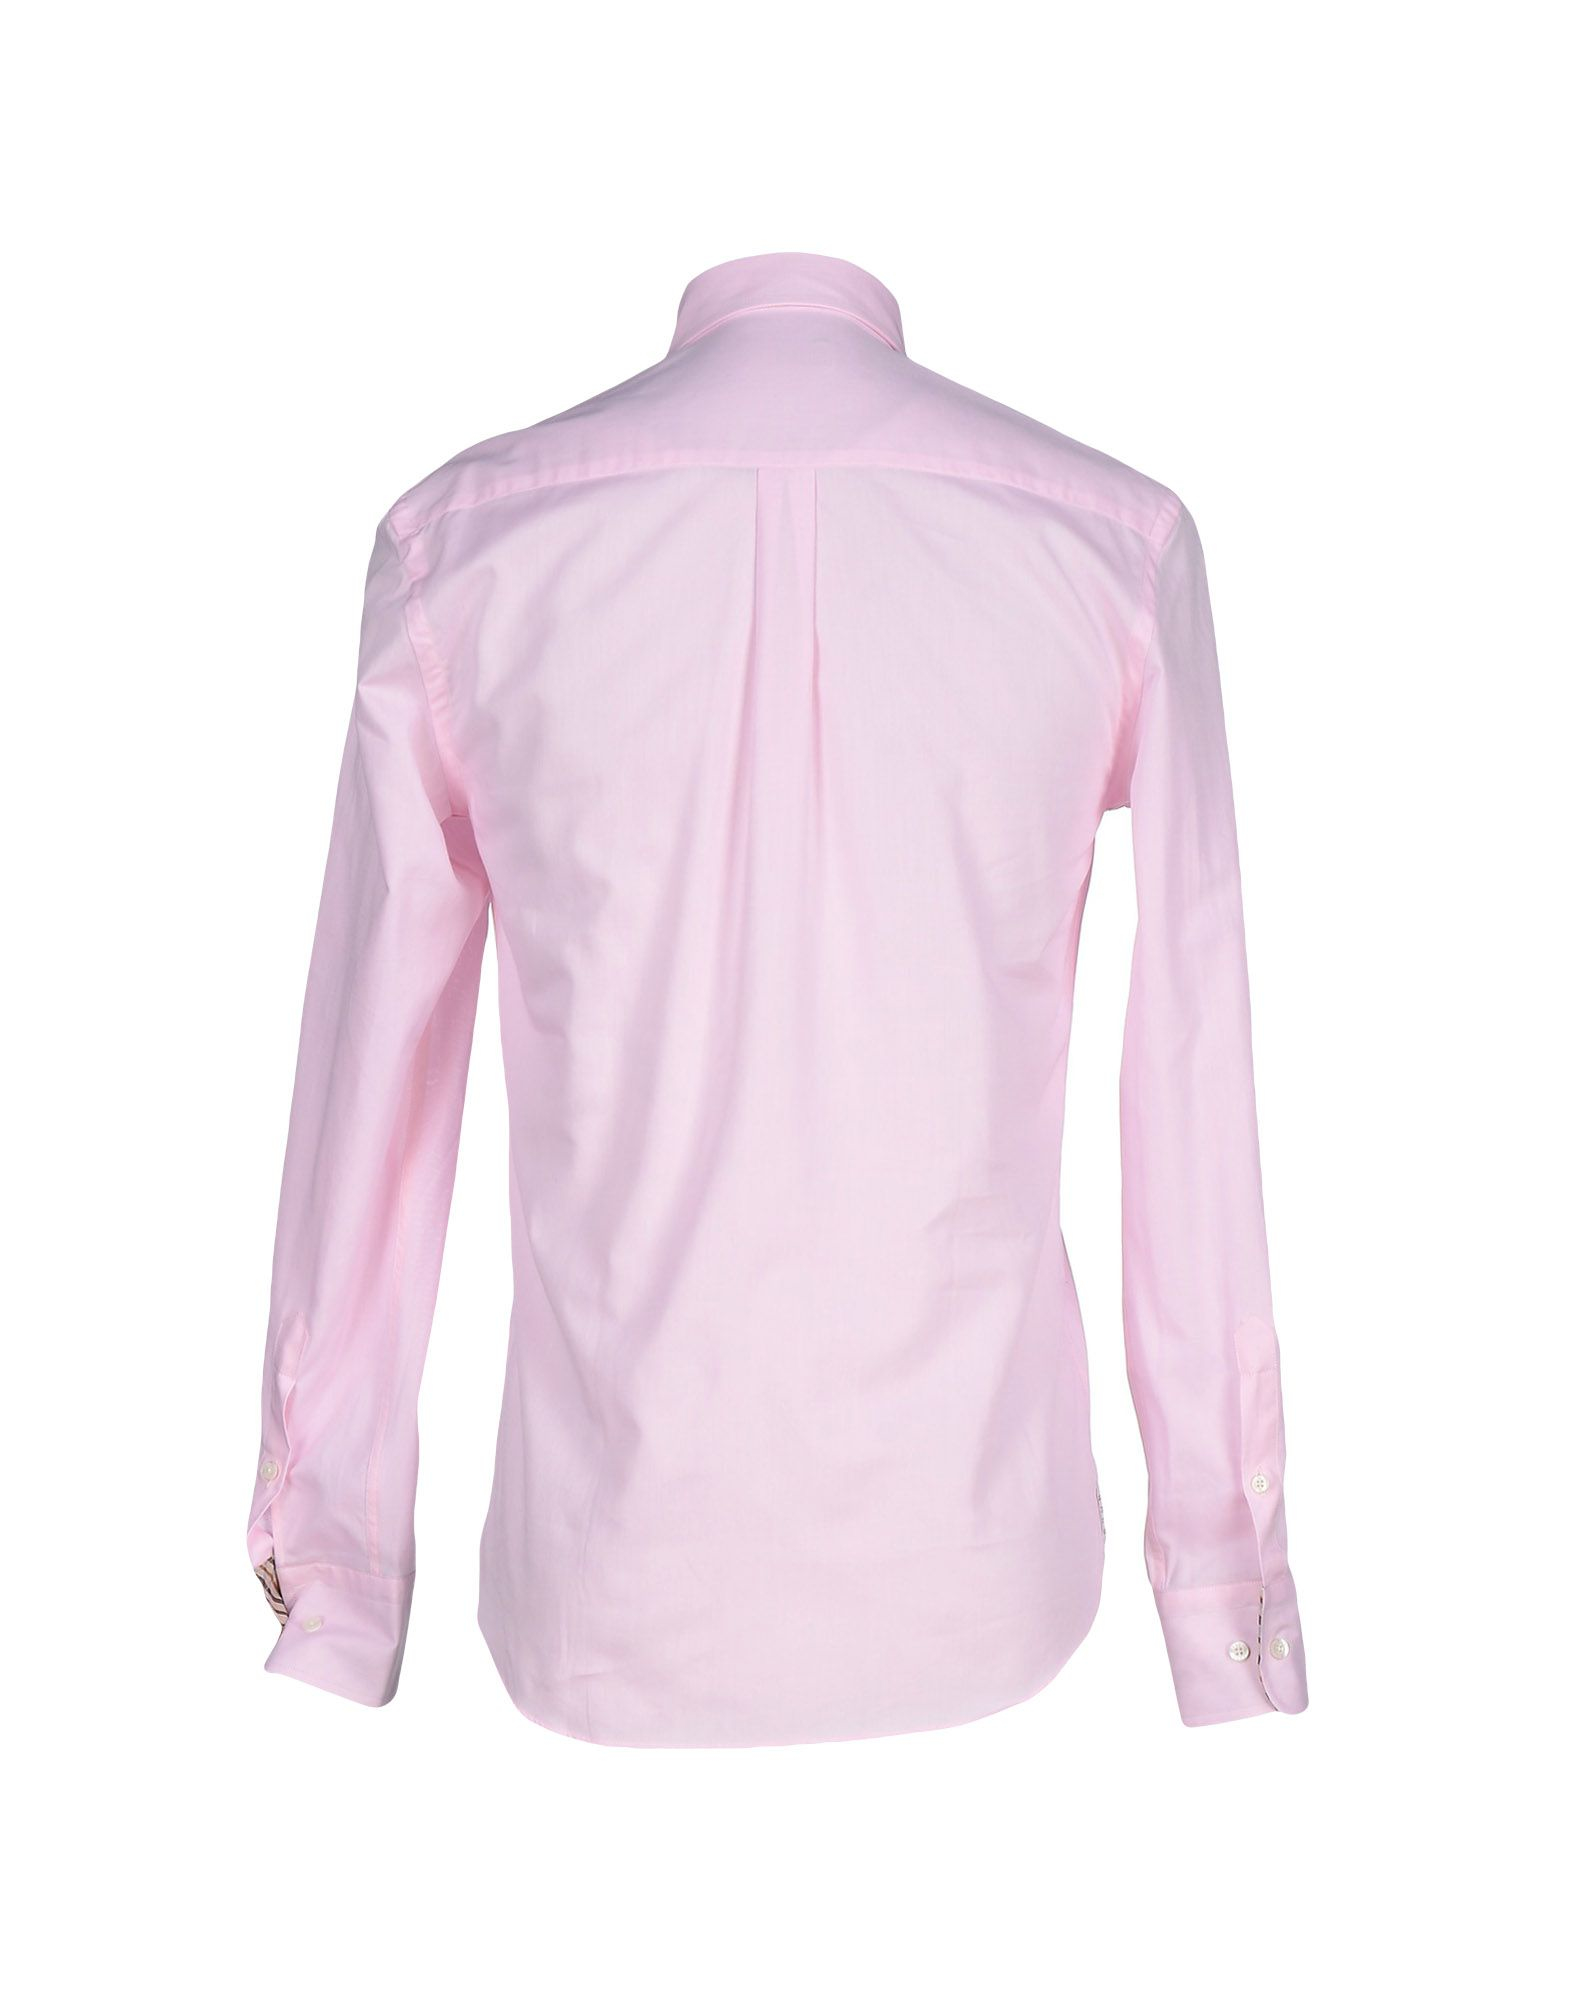 Lyst - Daks Shirt in Pink for Men